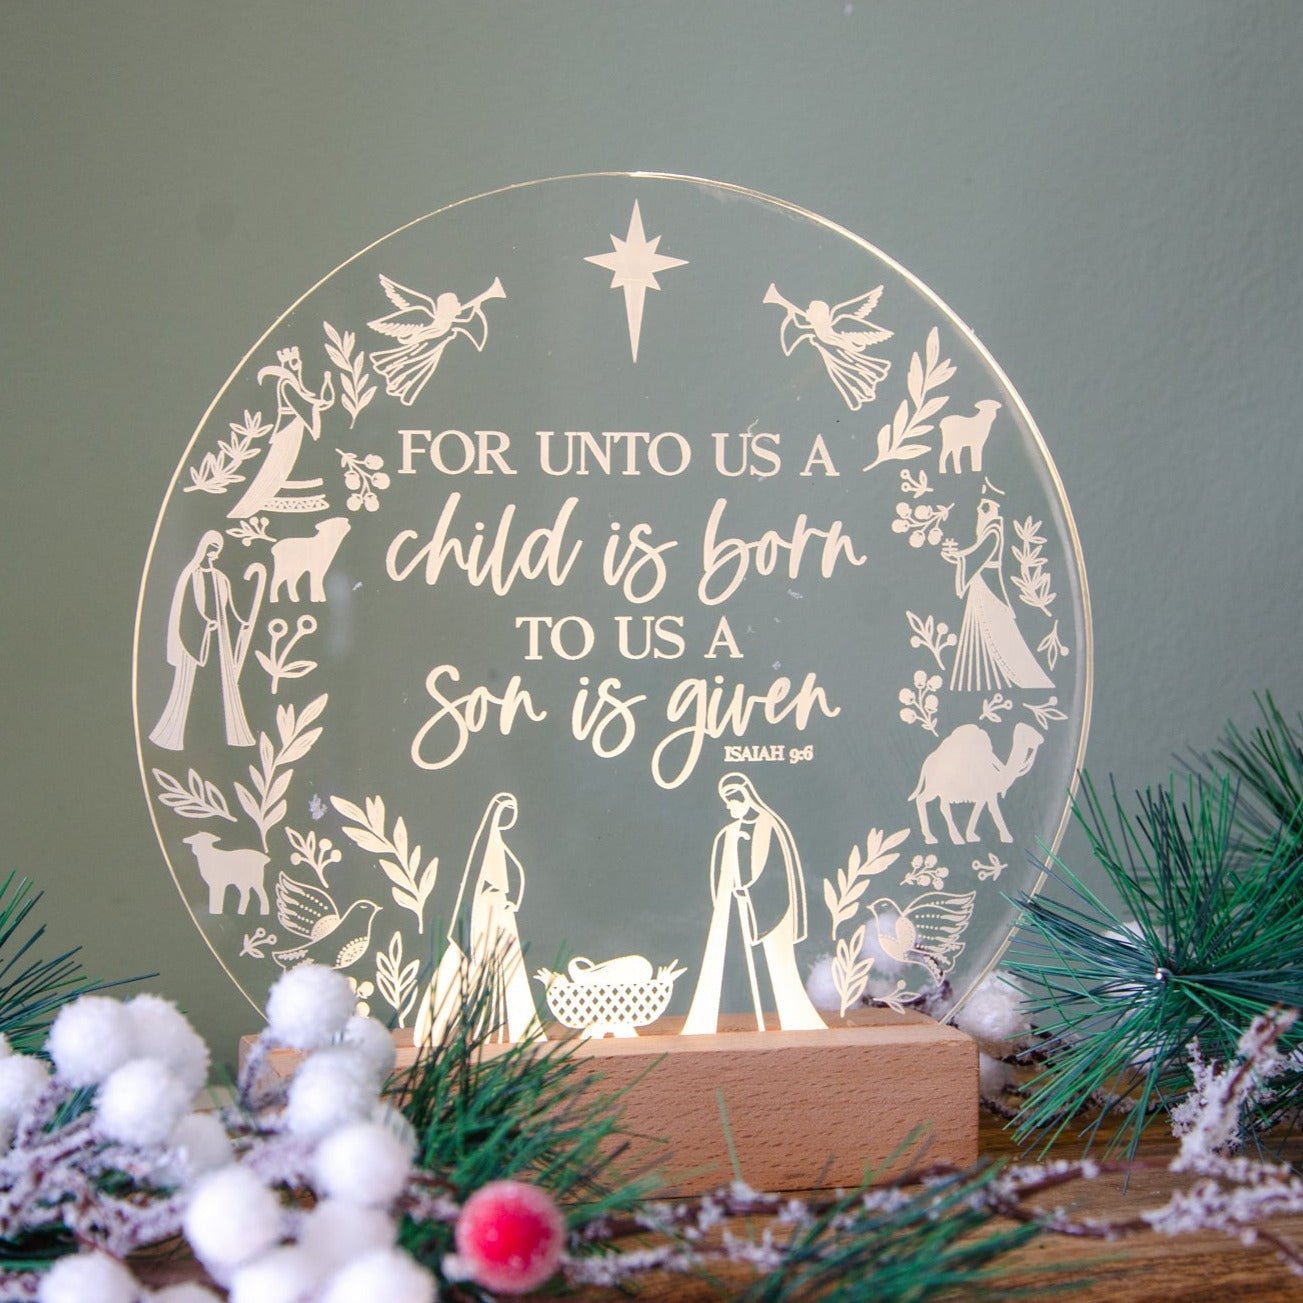 A child is born Isaiah 9:6 Christmas LED light